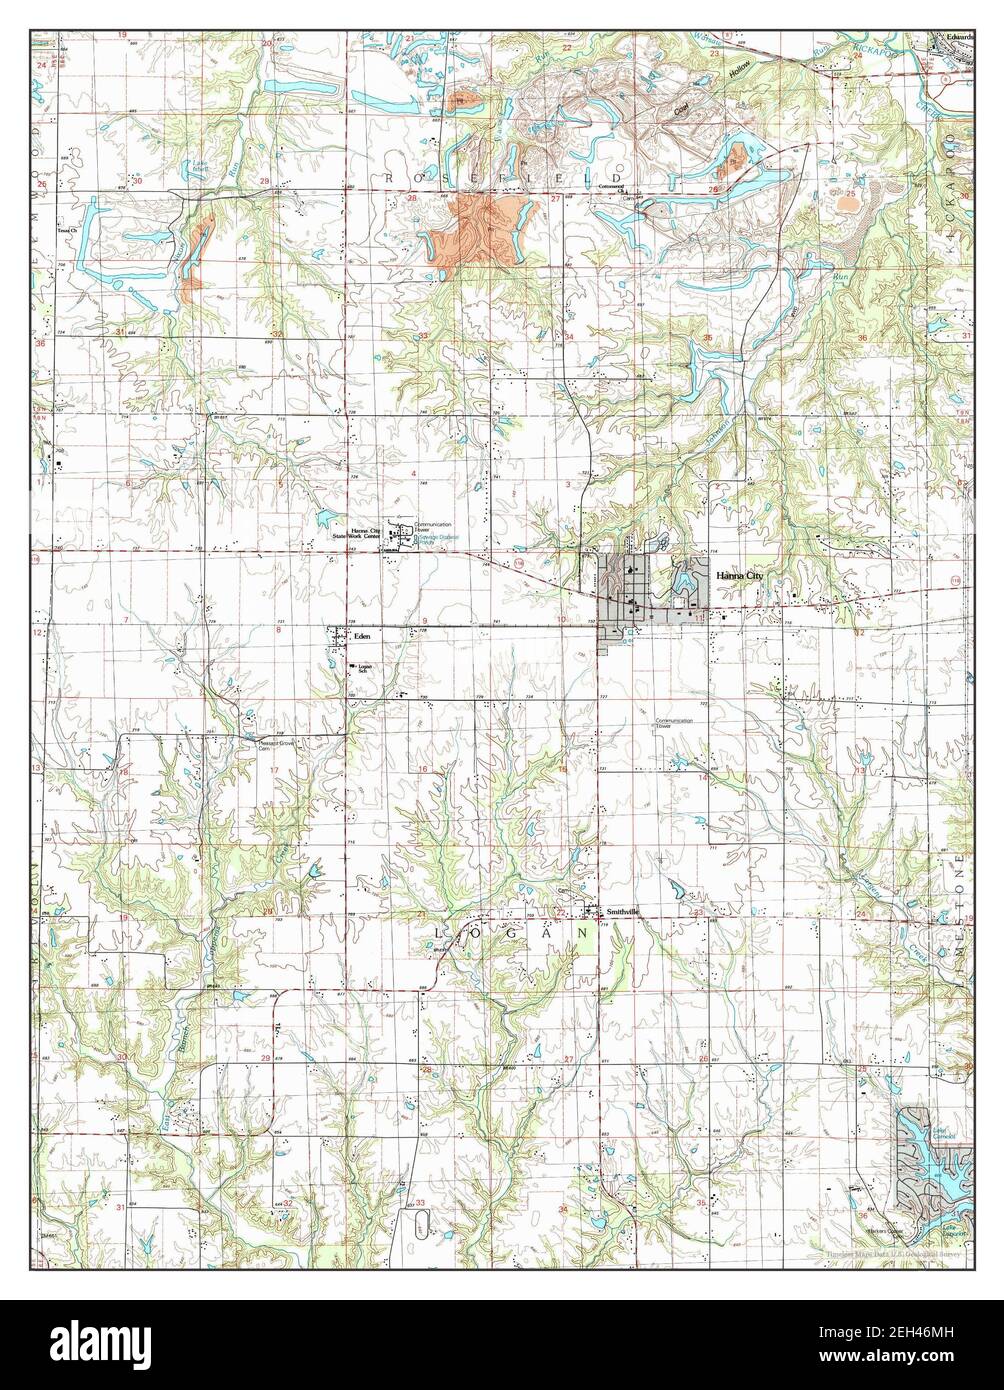 Hanna City, Illinois, map 1996, 1:24000, United States of America by Timeless Maps, data U.S. Geological Survey Stock Photo